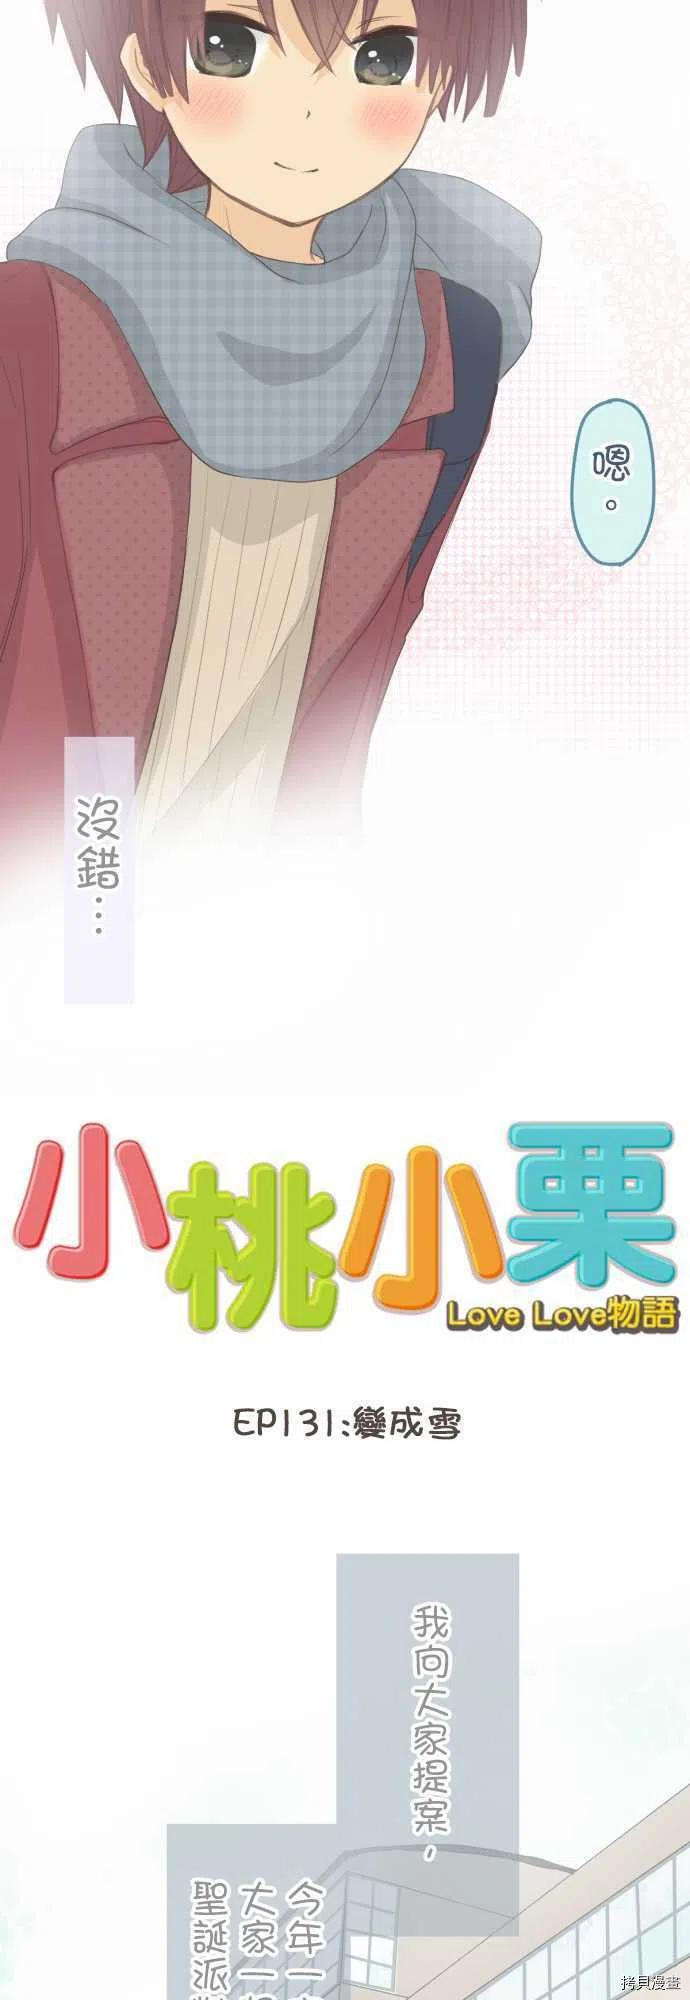 小桃小慄 Love Love物語 - 第131話 - 2